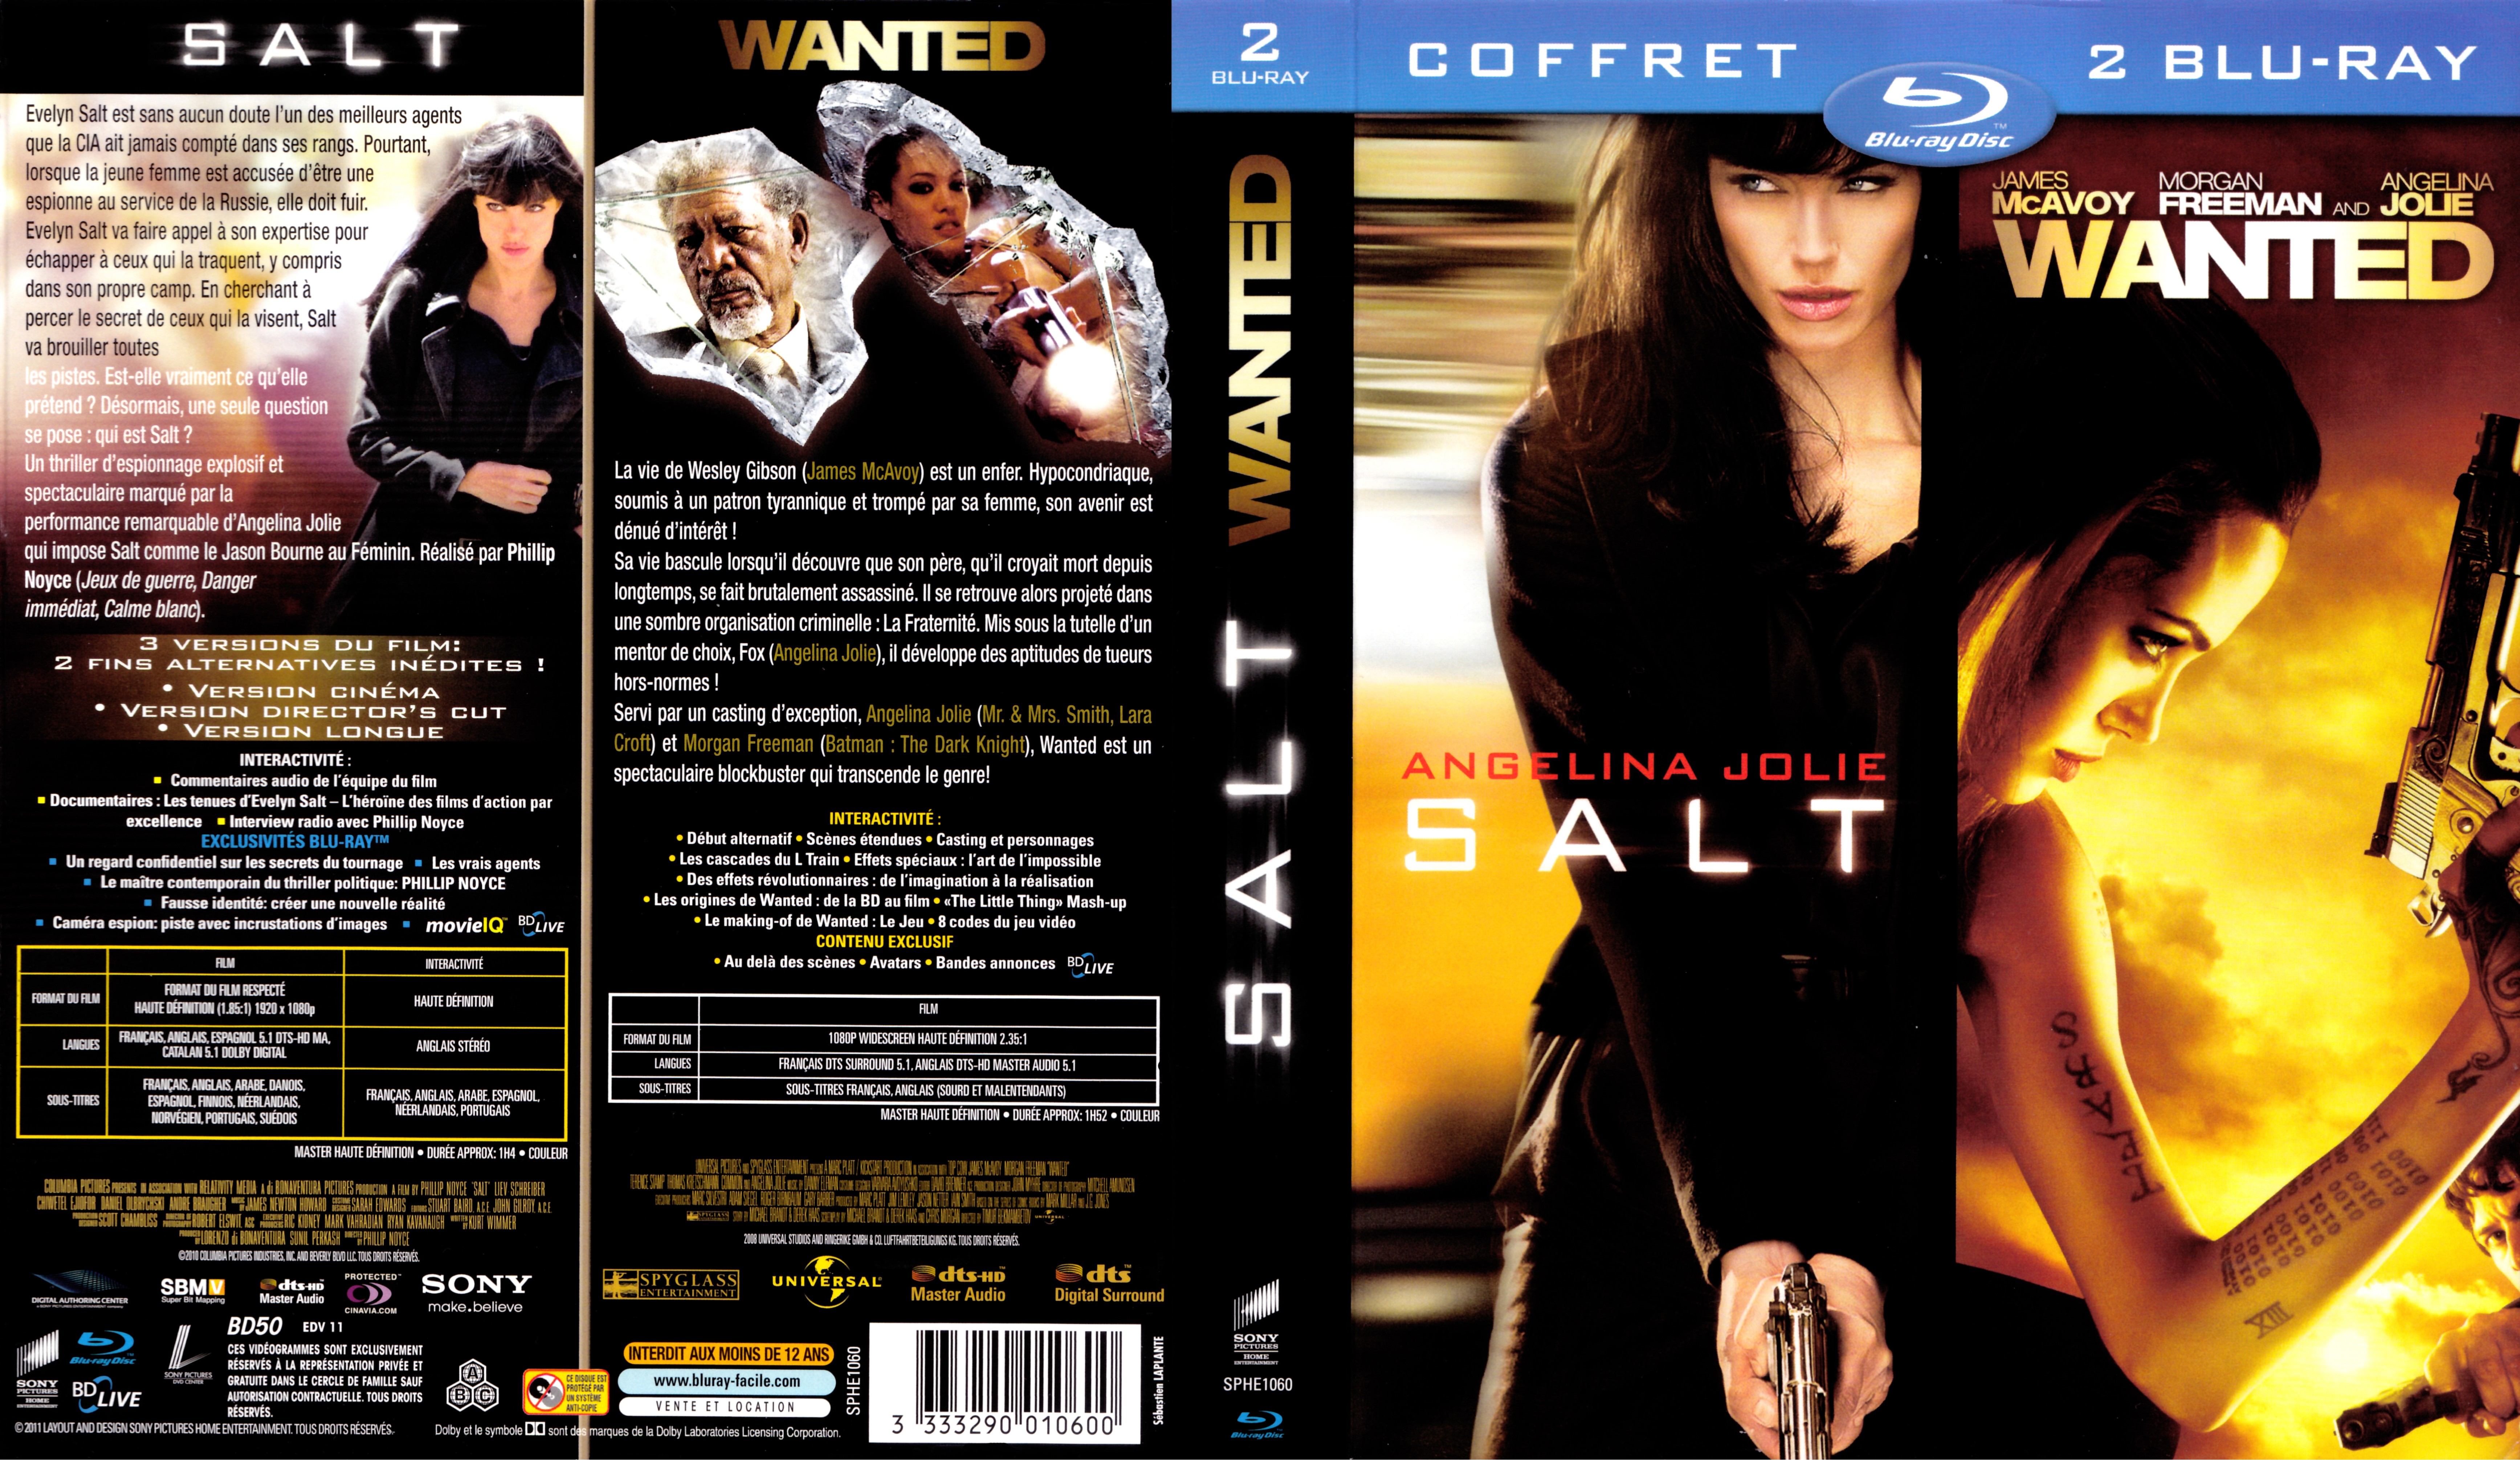 Jaquette DVD Salt & Wanted COFFRET (BLU-RAY)